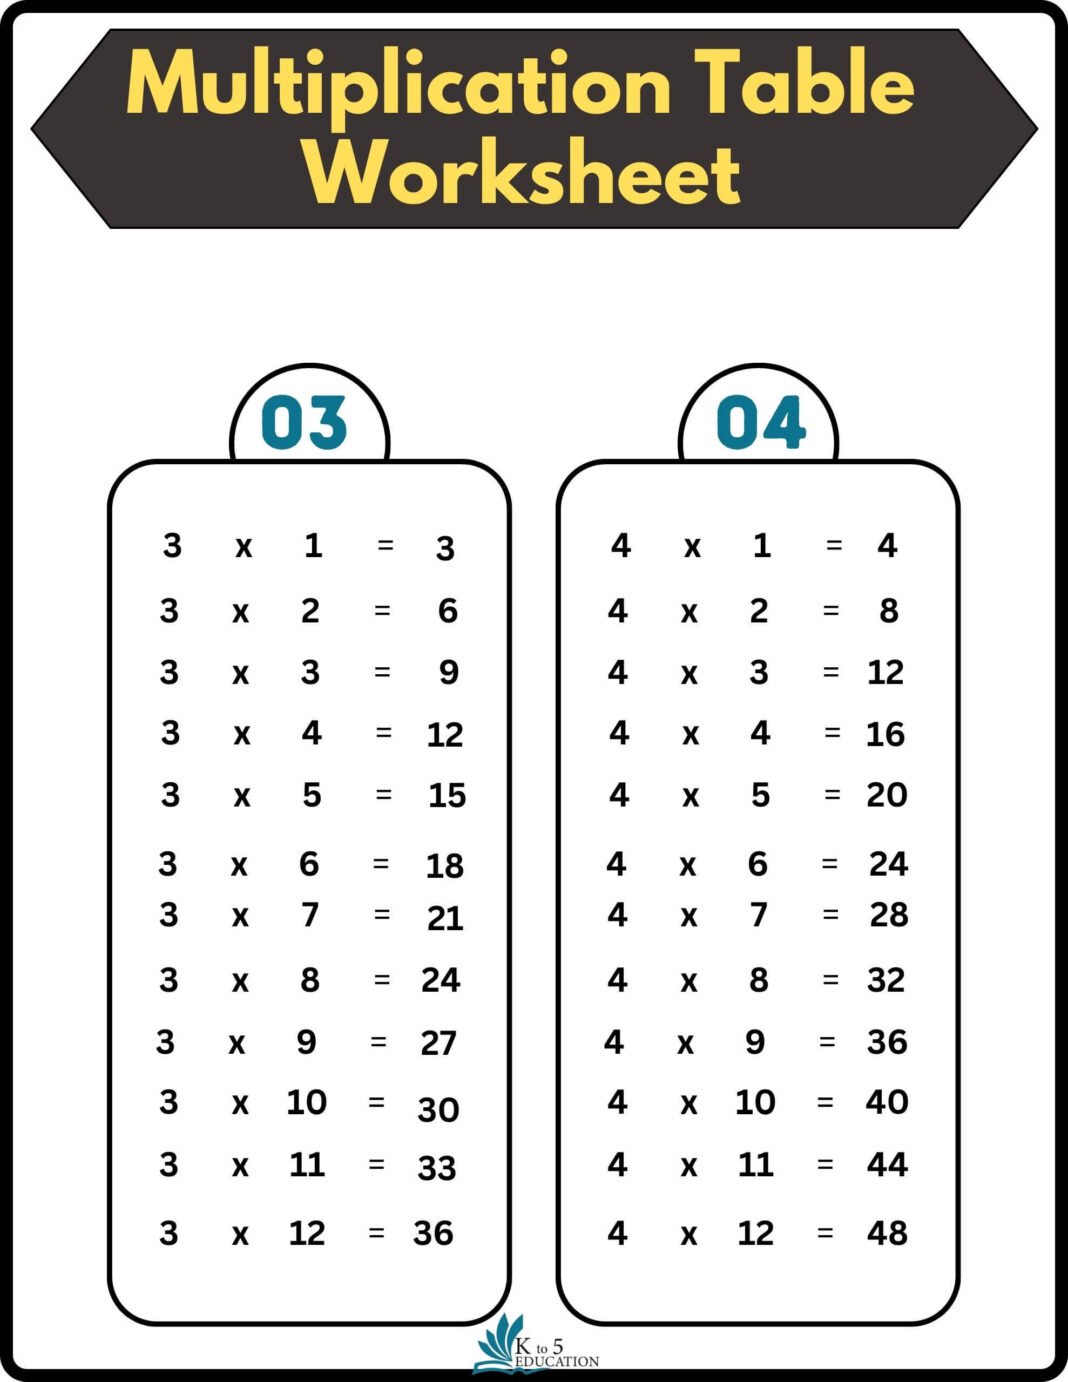 printable-multiplication-table-worksheets-free-download